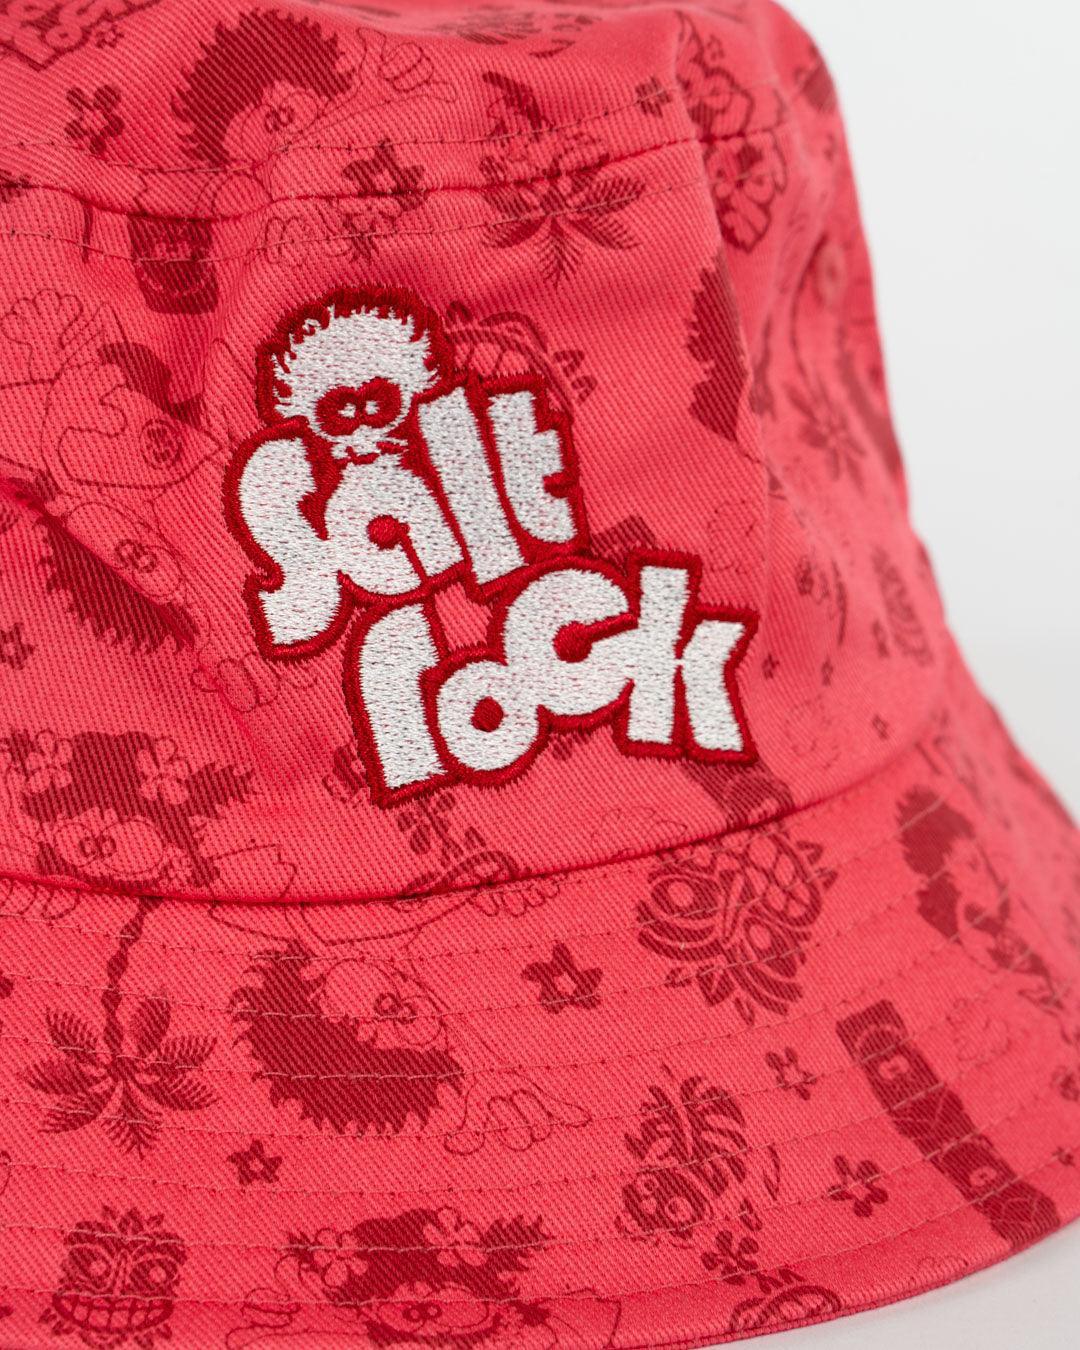 SALTROCK - RED TIKI TOK KIDS BUCKET HAT